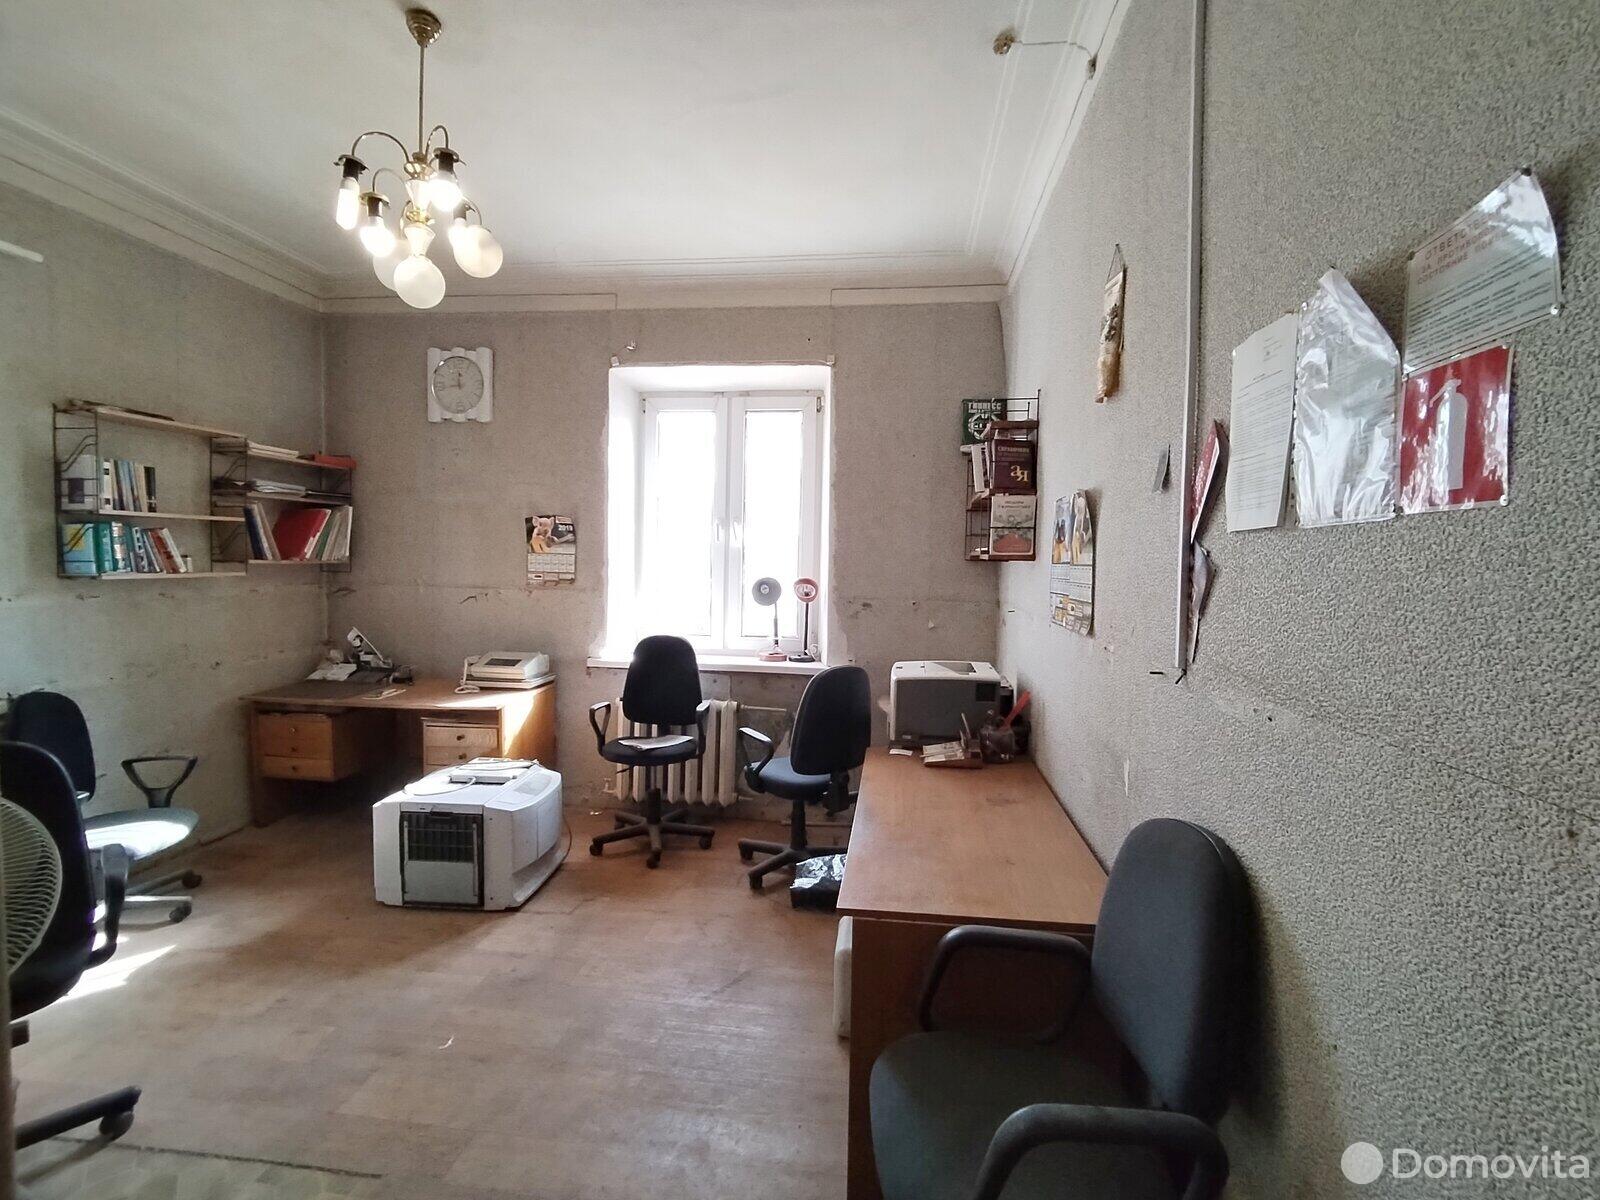 квартира, Борисов, ул. 8 Марта, д. 16, стоимость продажи 139 943 р.